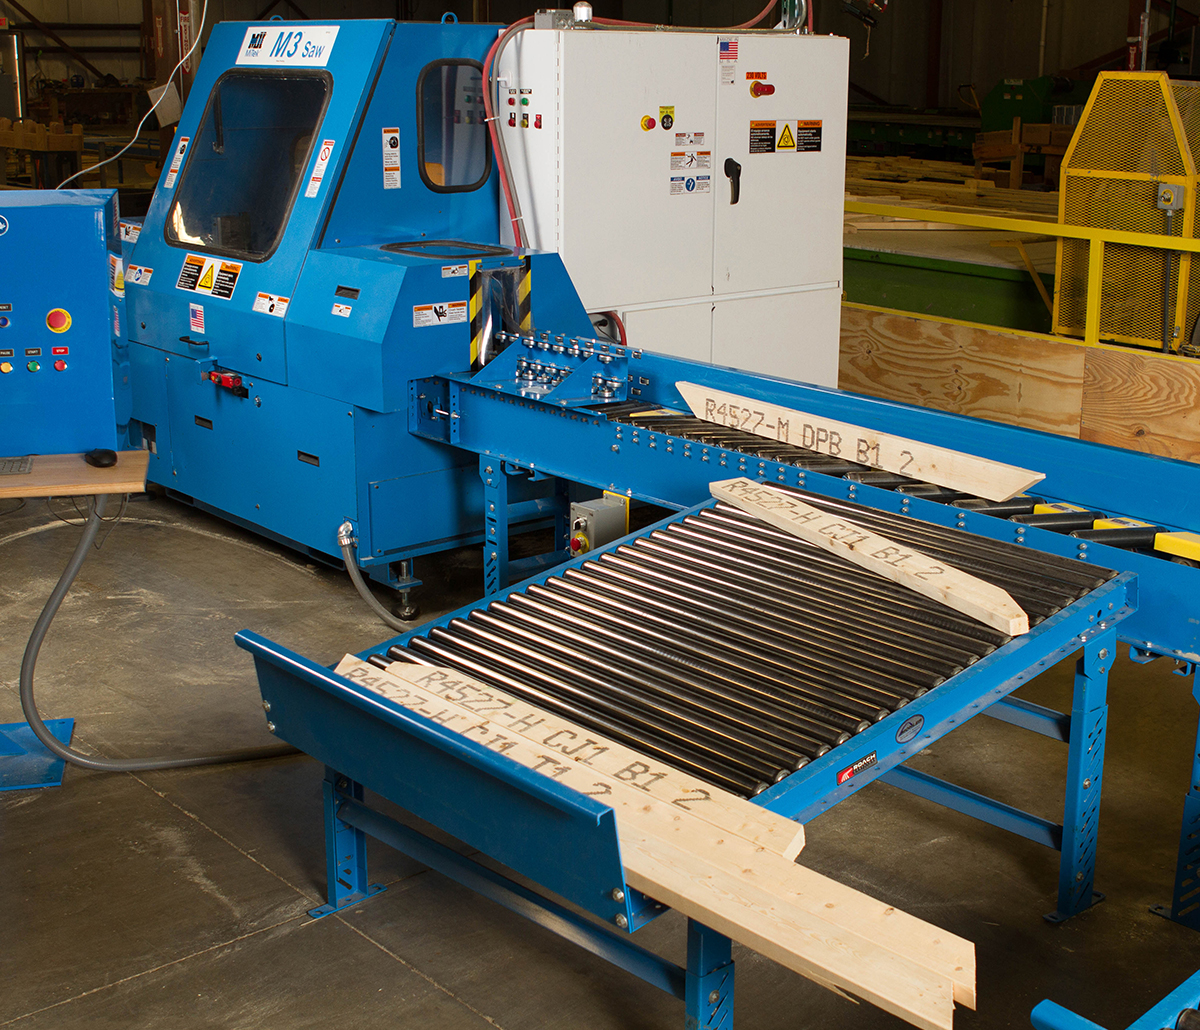 MiTek Blade Screwed Conveyor Automatisierte Lösungen - Blew Screwed Conveyor in Lagereinrichtung